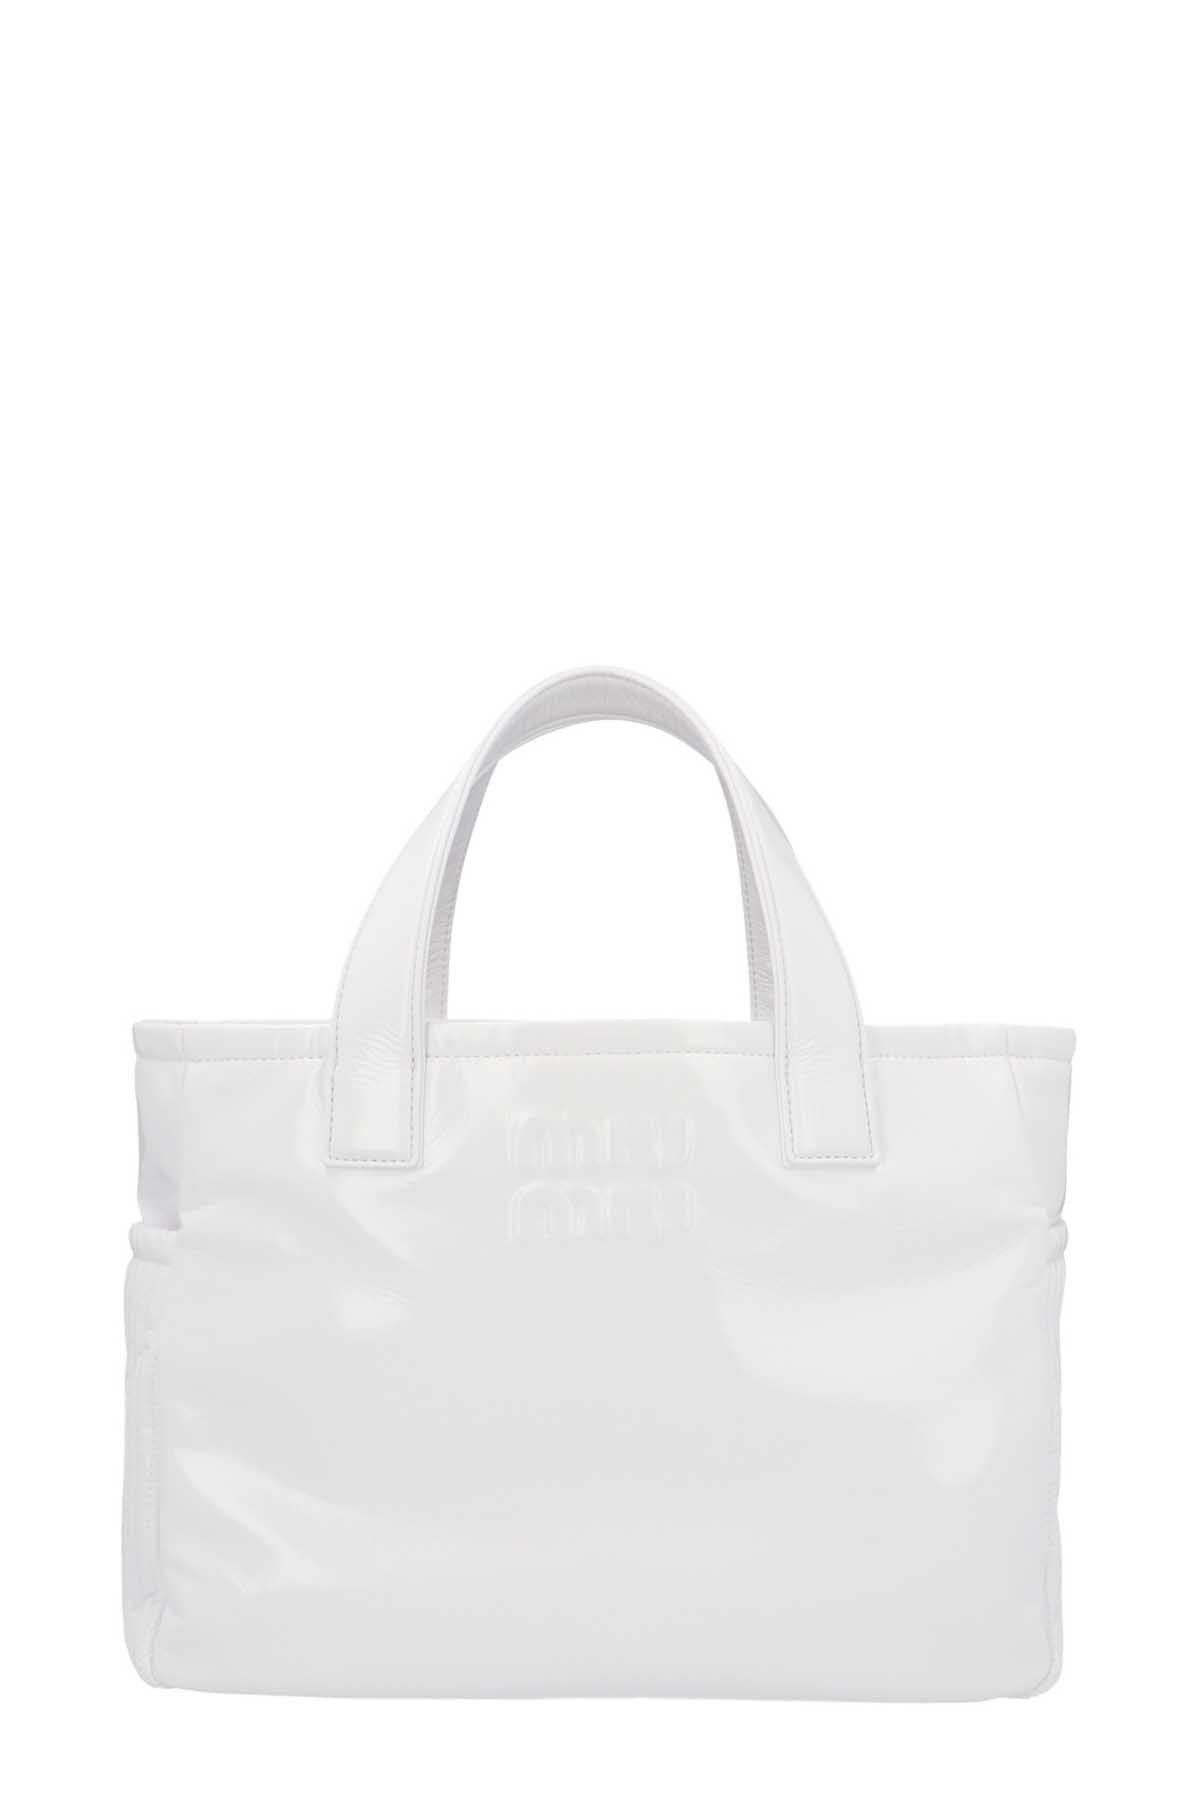 MIU MIU Embossed Logo Shopping Bag